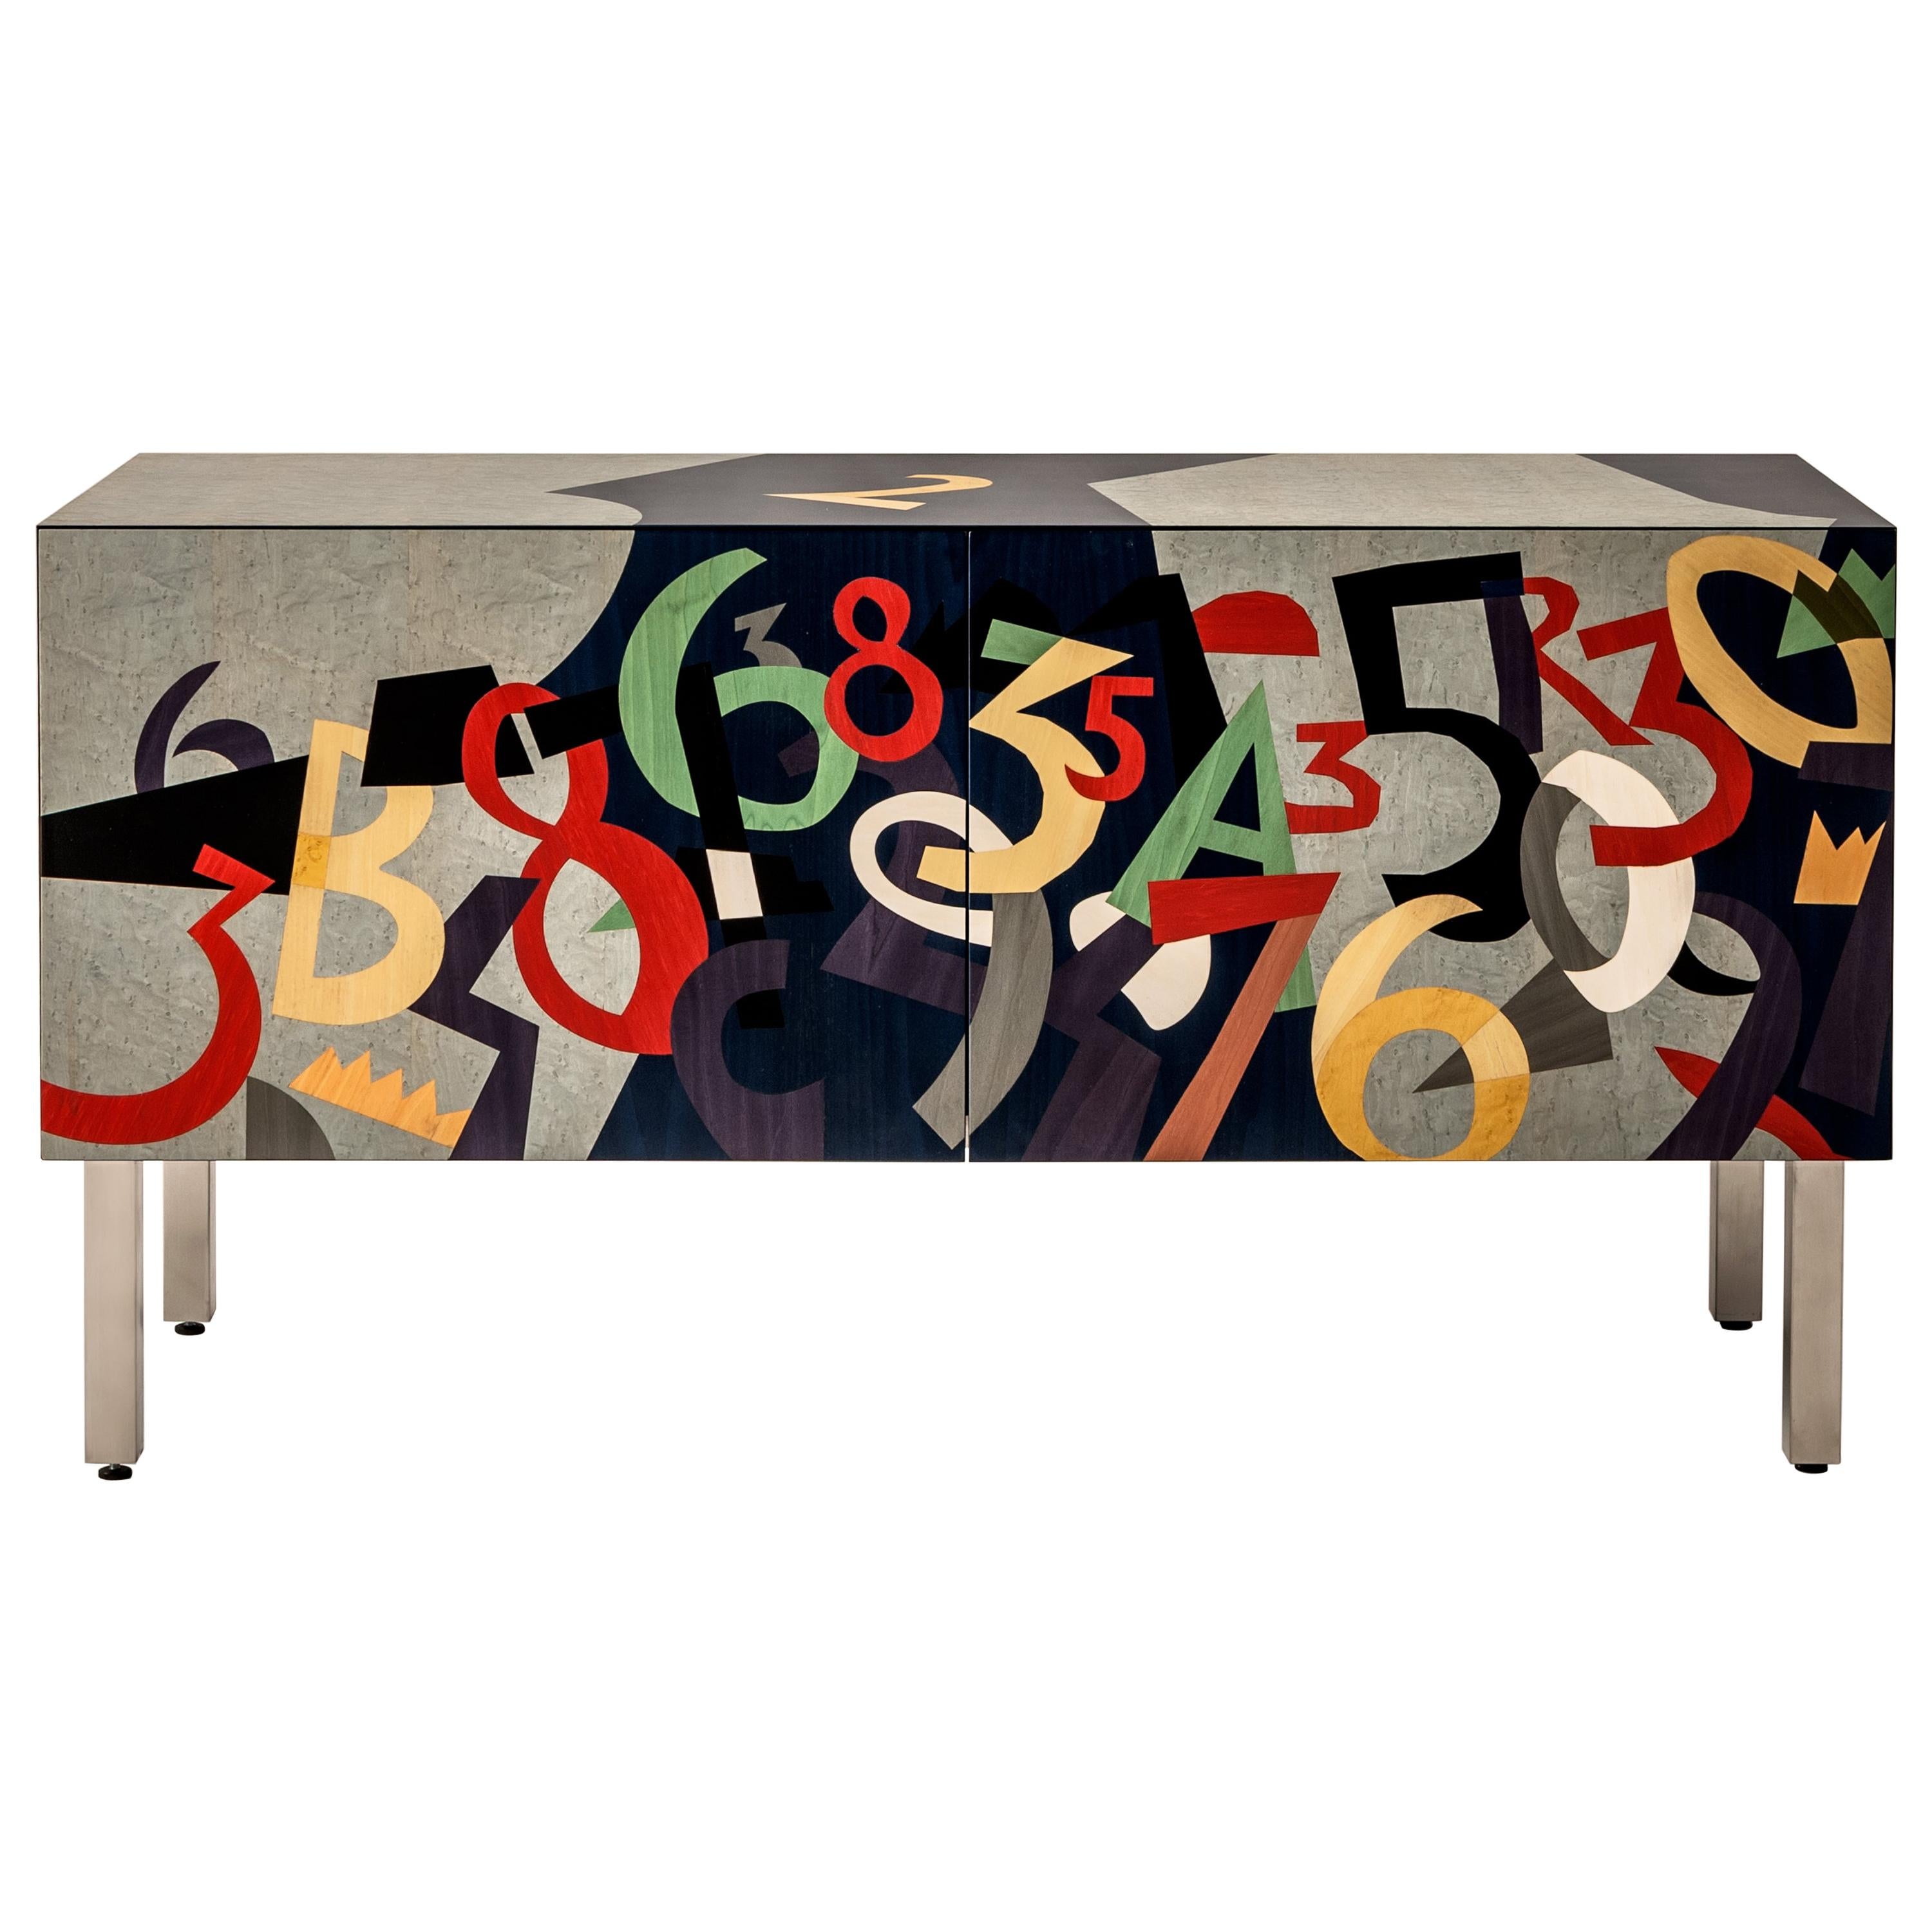 Laurameroni "Numeri" Limited Edition Inlaid Sideboard by Ugo Nespolo